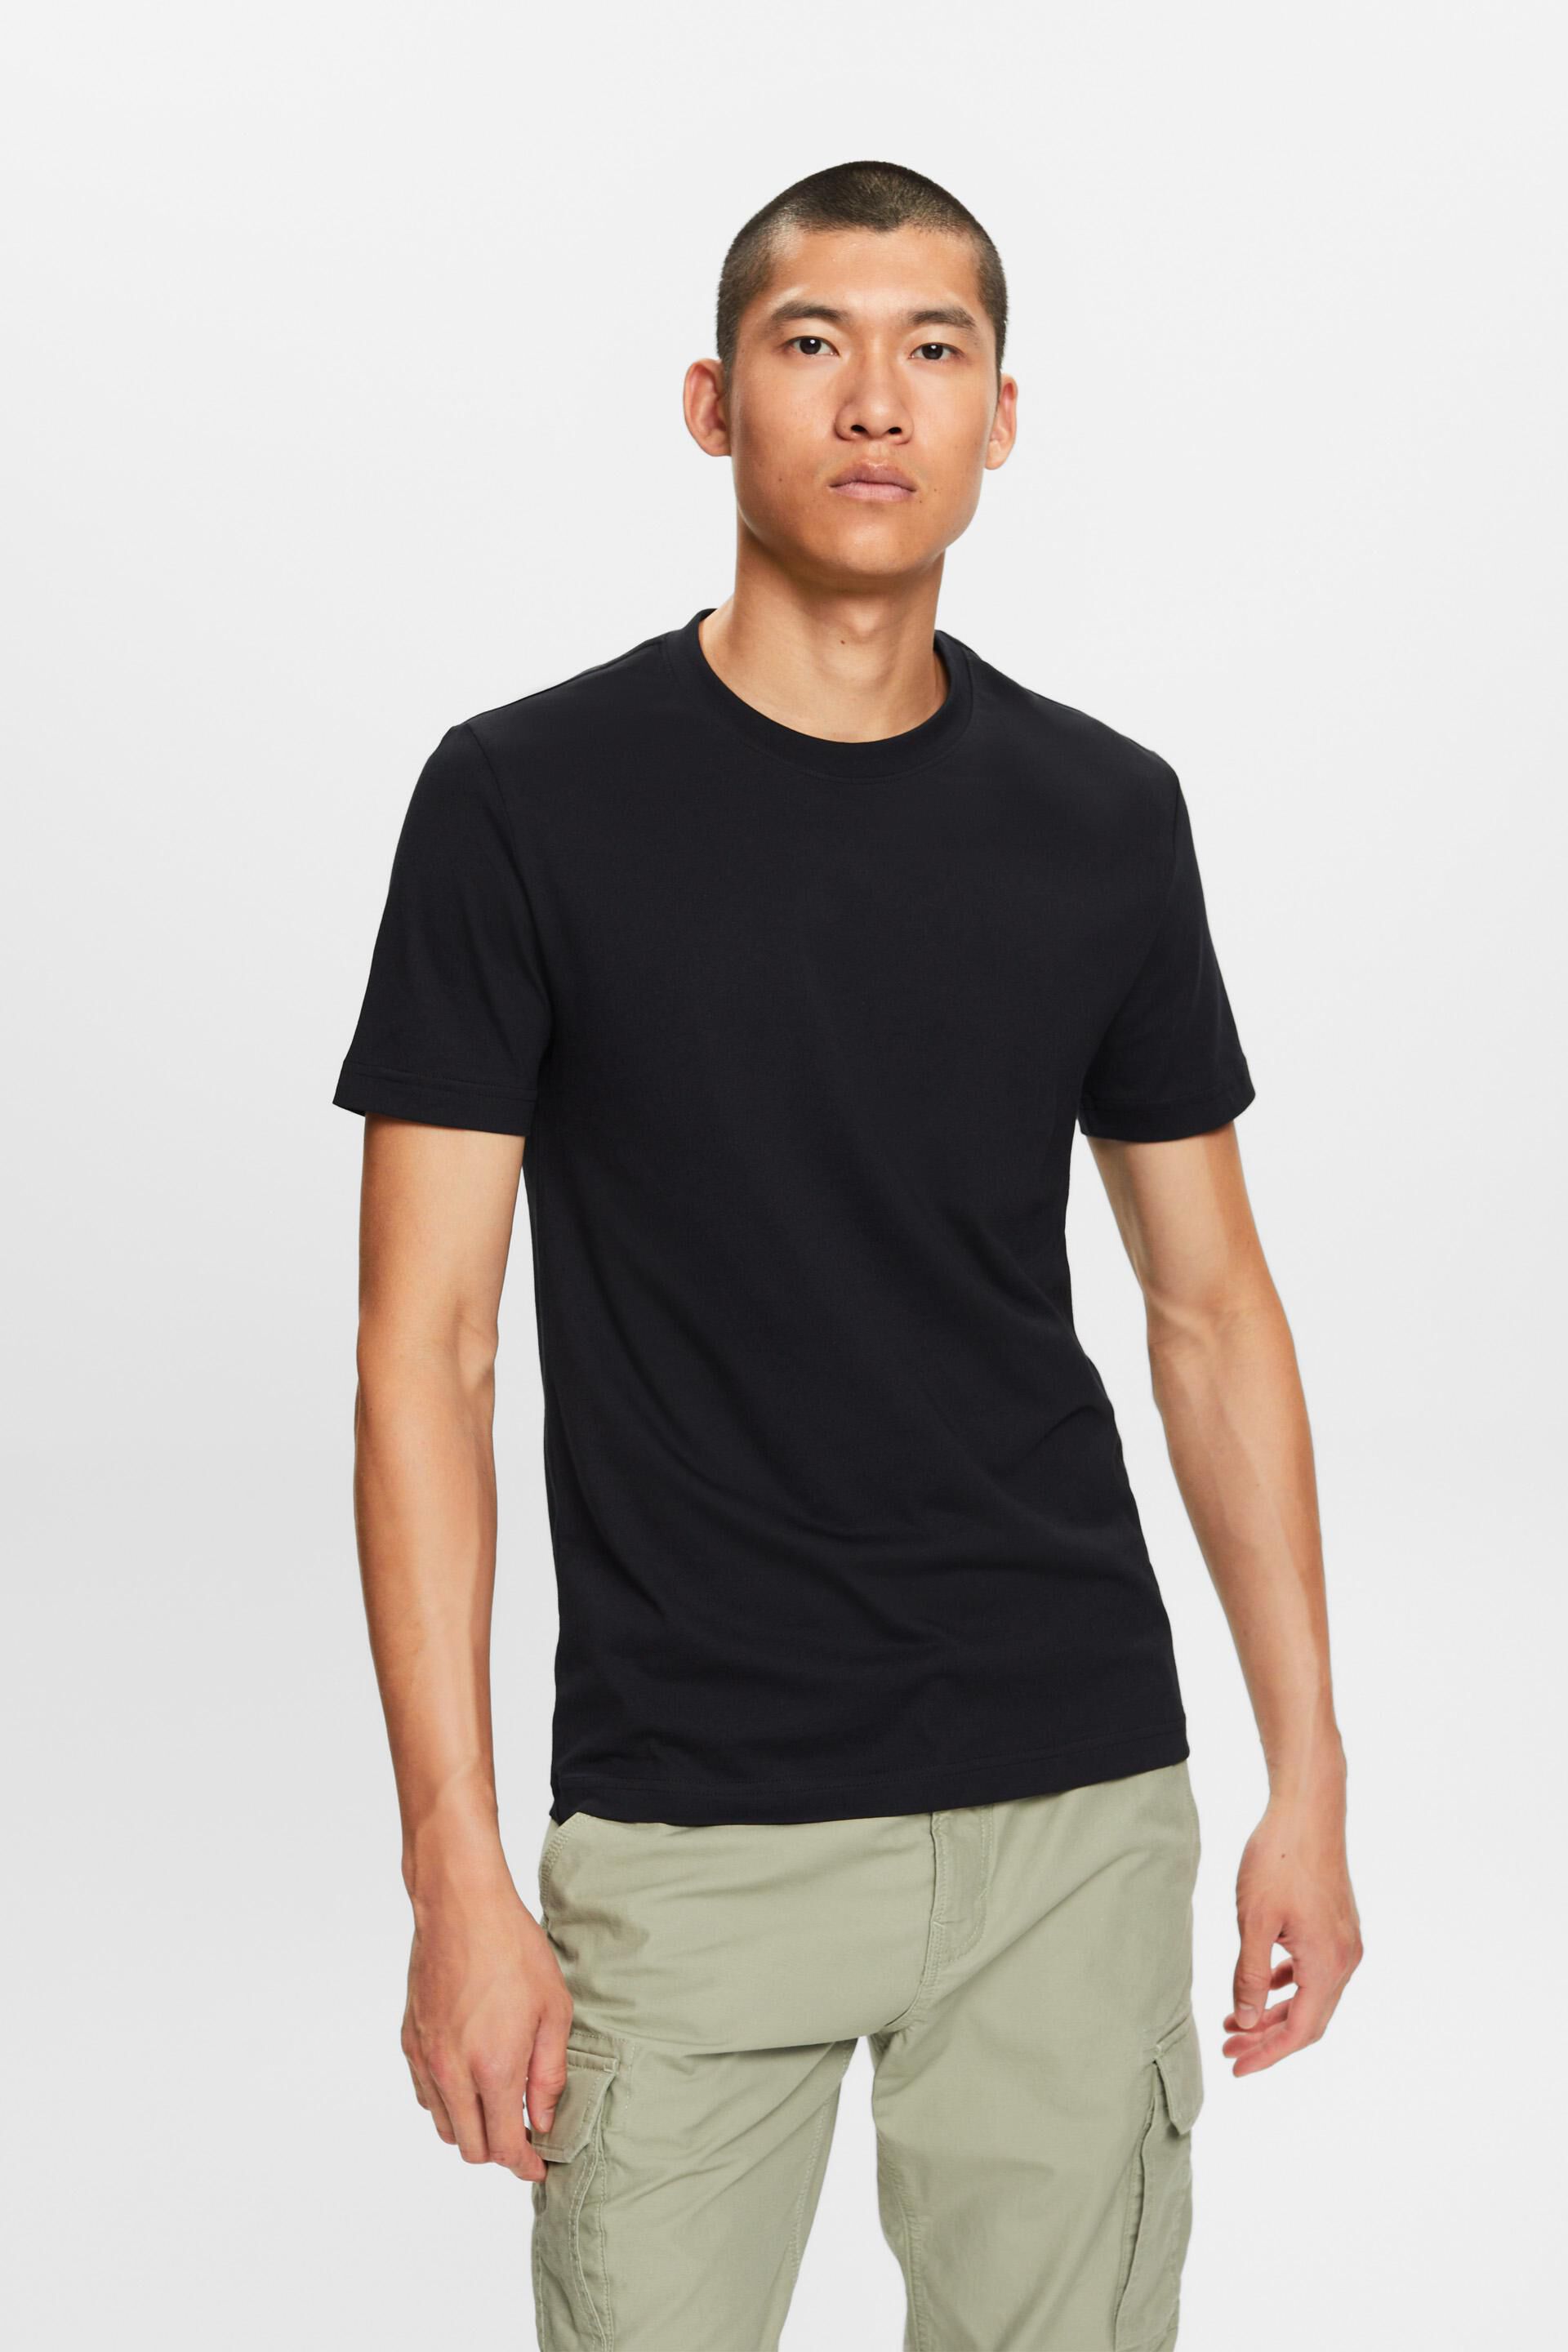 Esprit t-shirt, cotton crewneck Jersey 100%